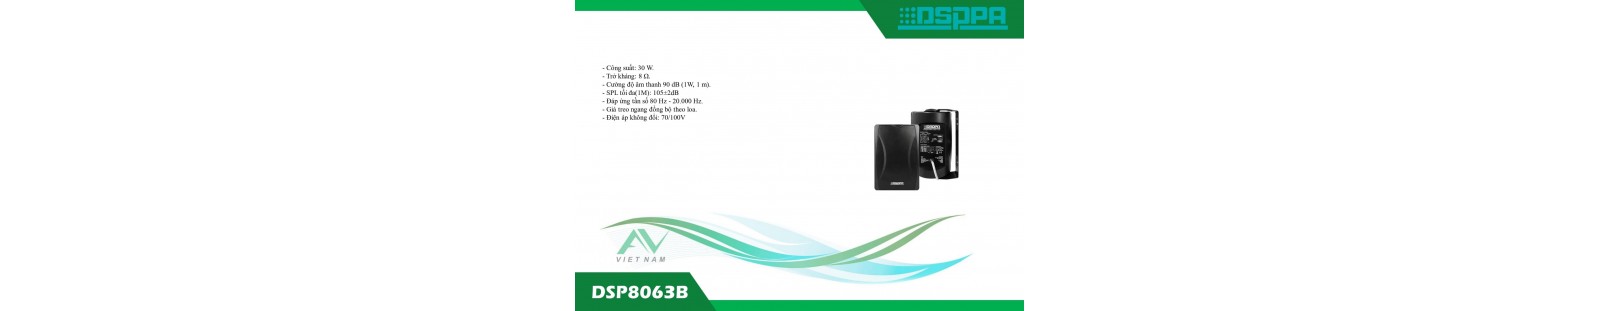 DSP8063B